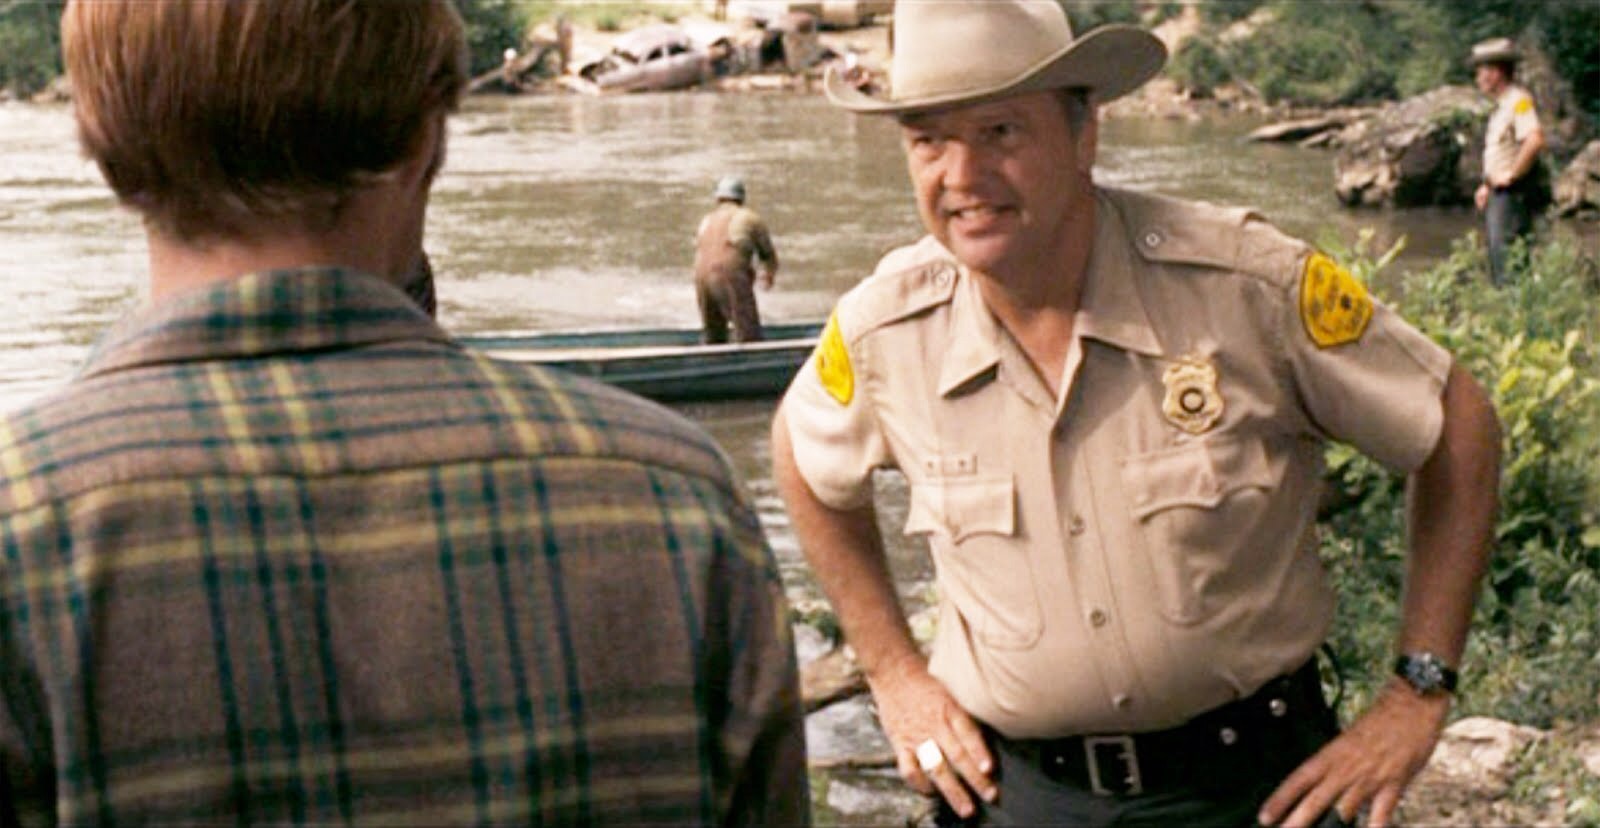 Sheriff Bullard